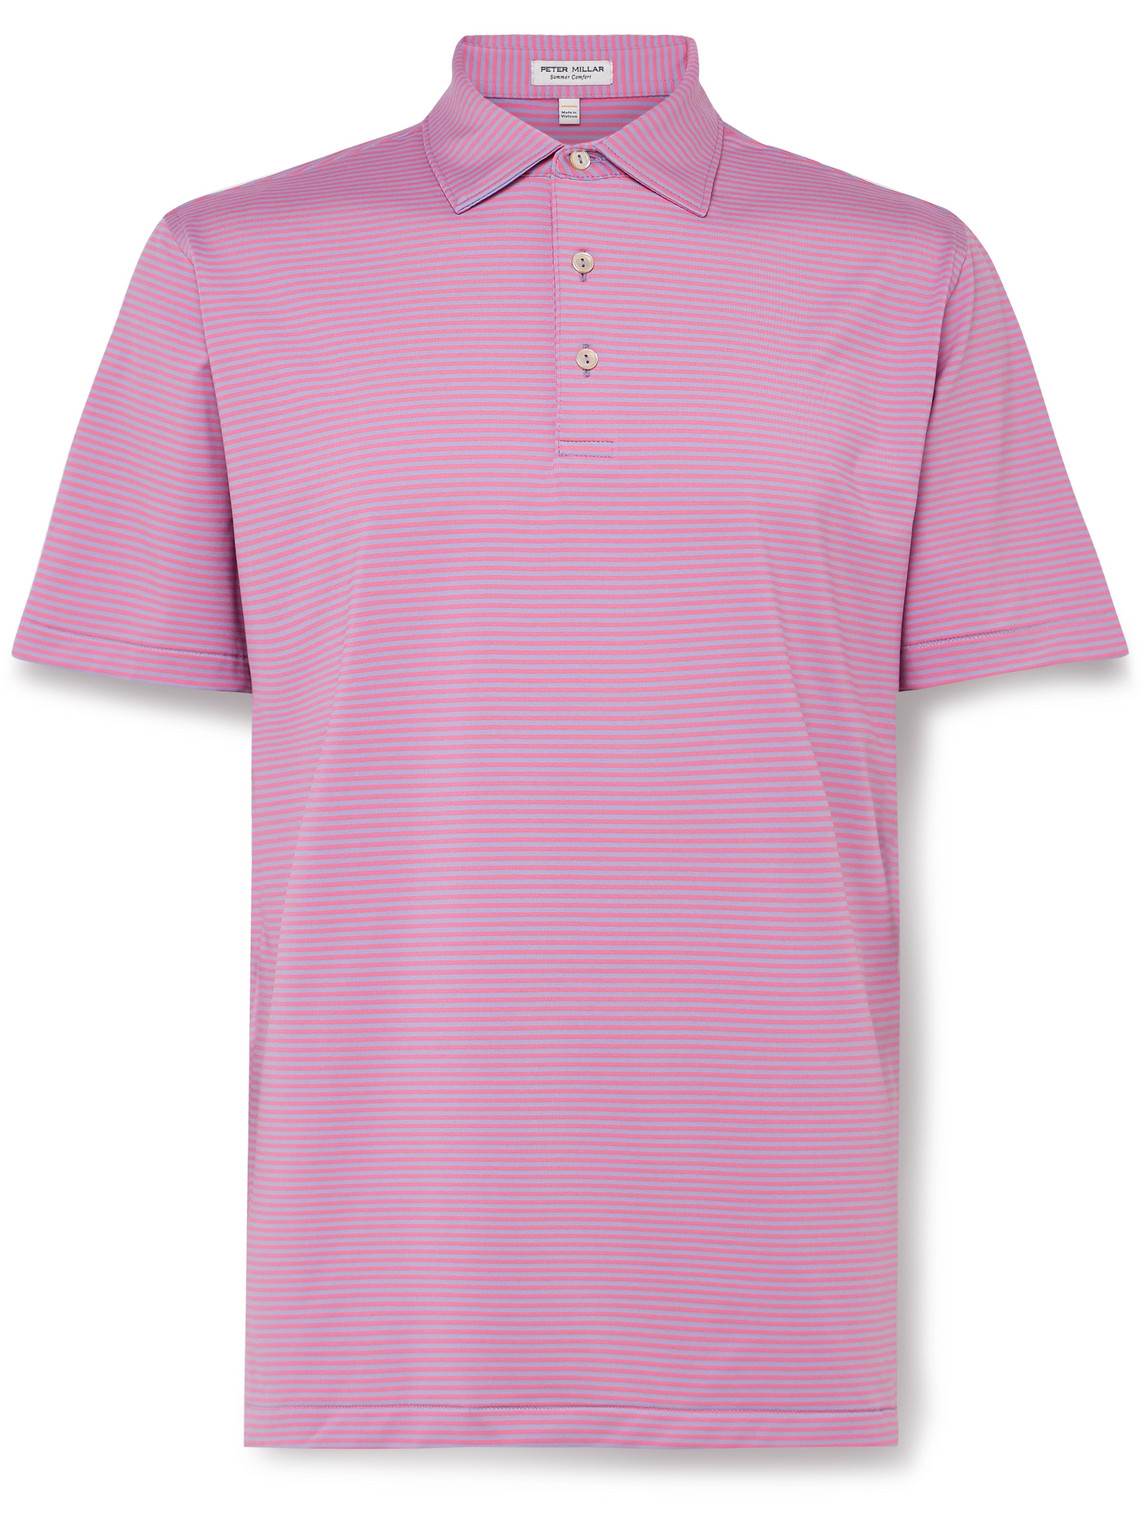 Hales Performance Striped Tech-Jersey Golf Polo Shirt